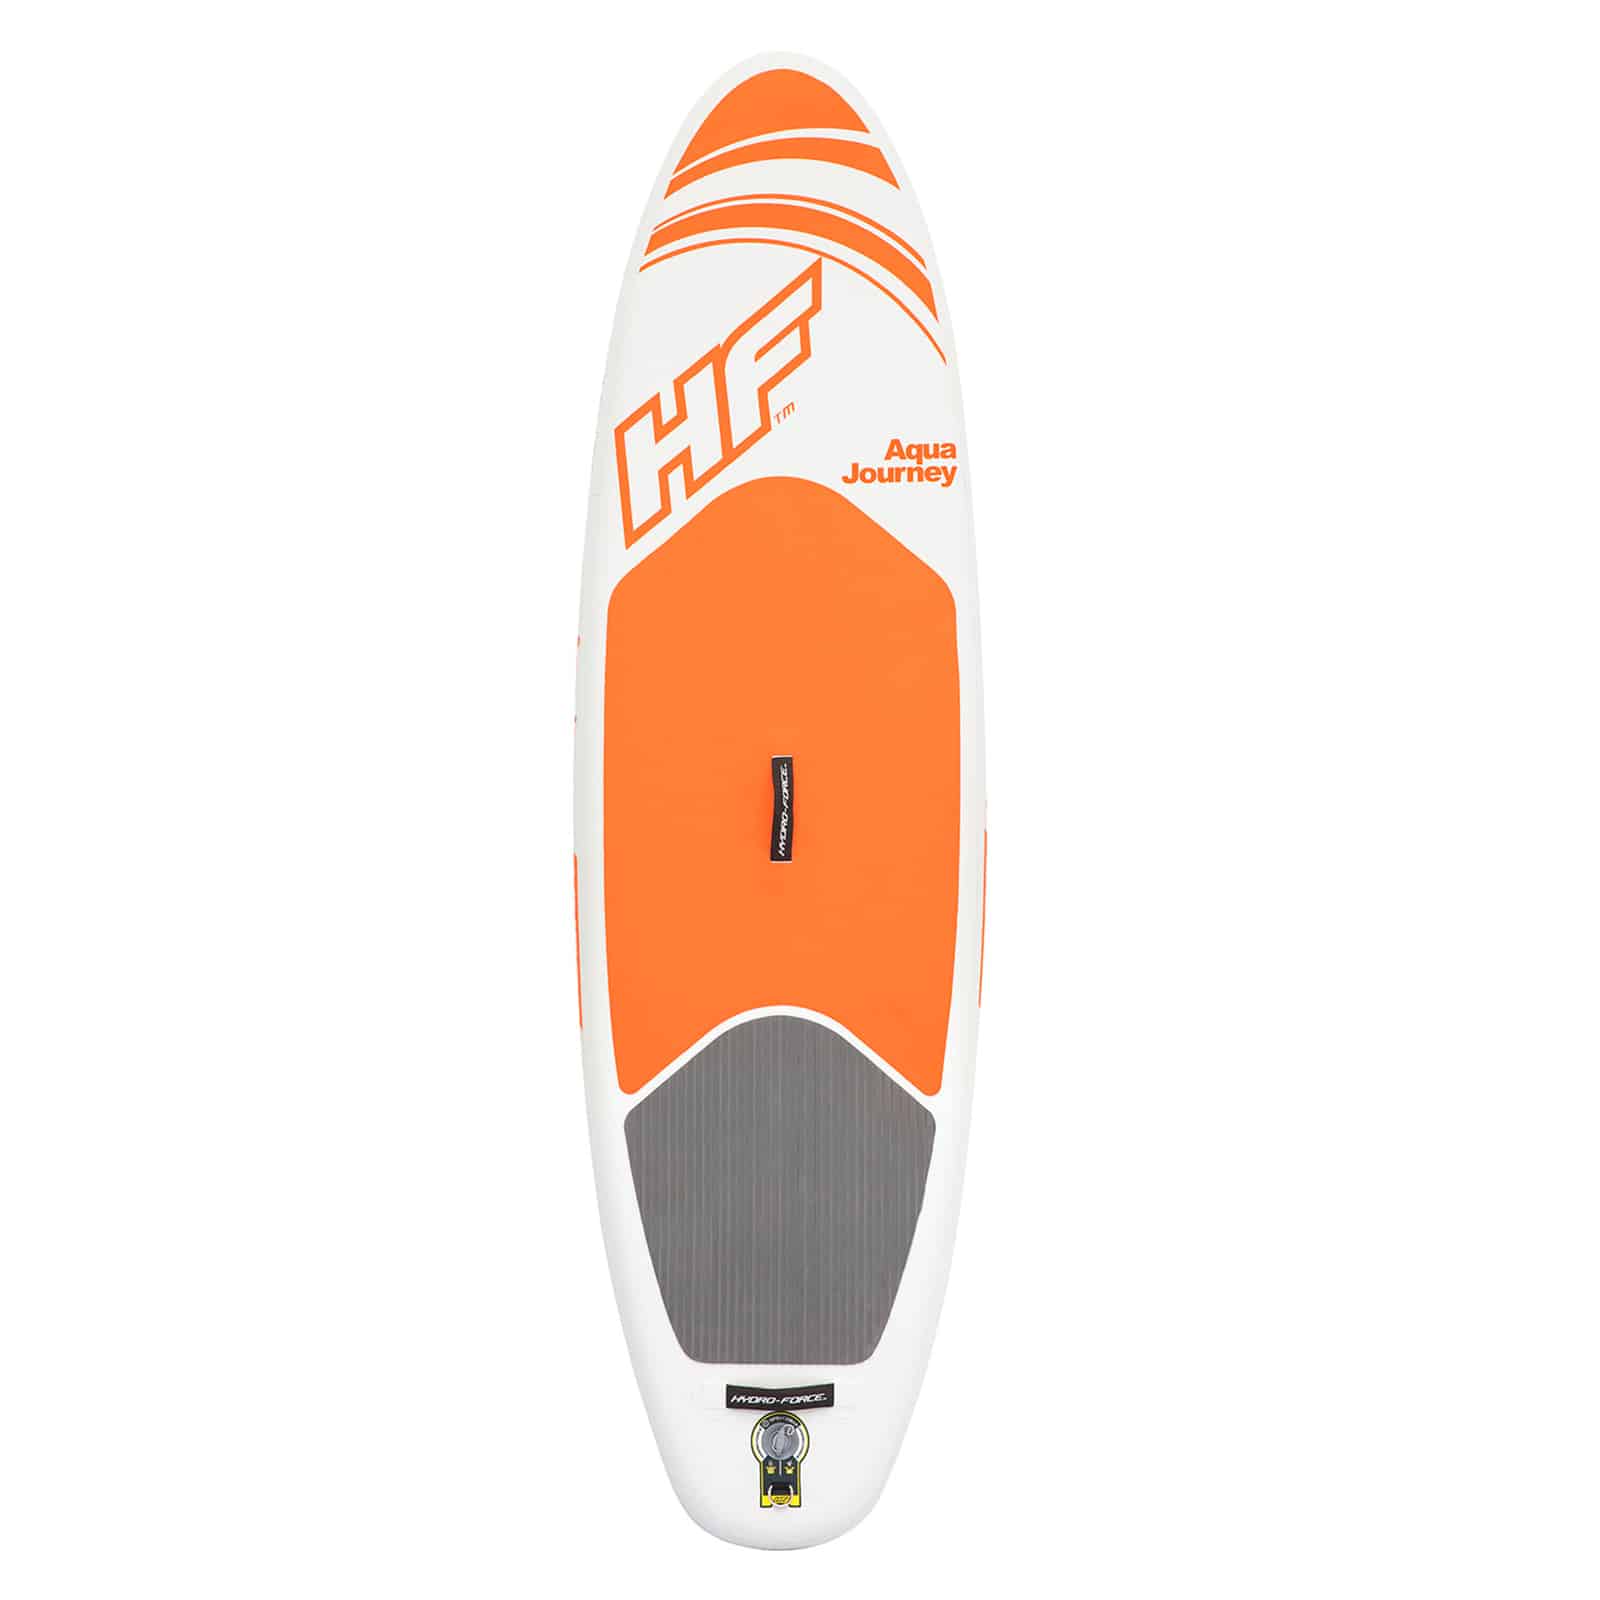 Tabla Paddle Surf Hinchable Bestway Hydro-force Aqua Journey 274x76x12 Cm Con Bomba Y Bolsa De Viaje